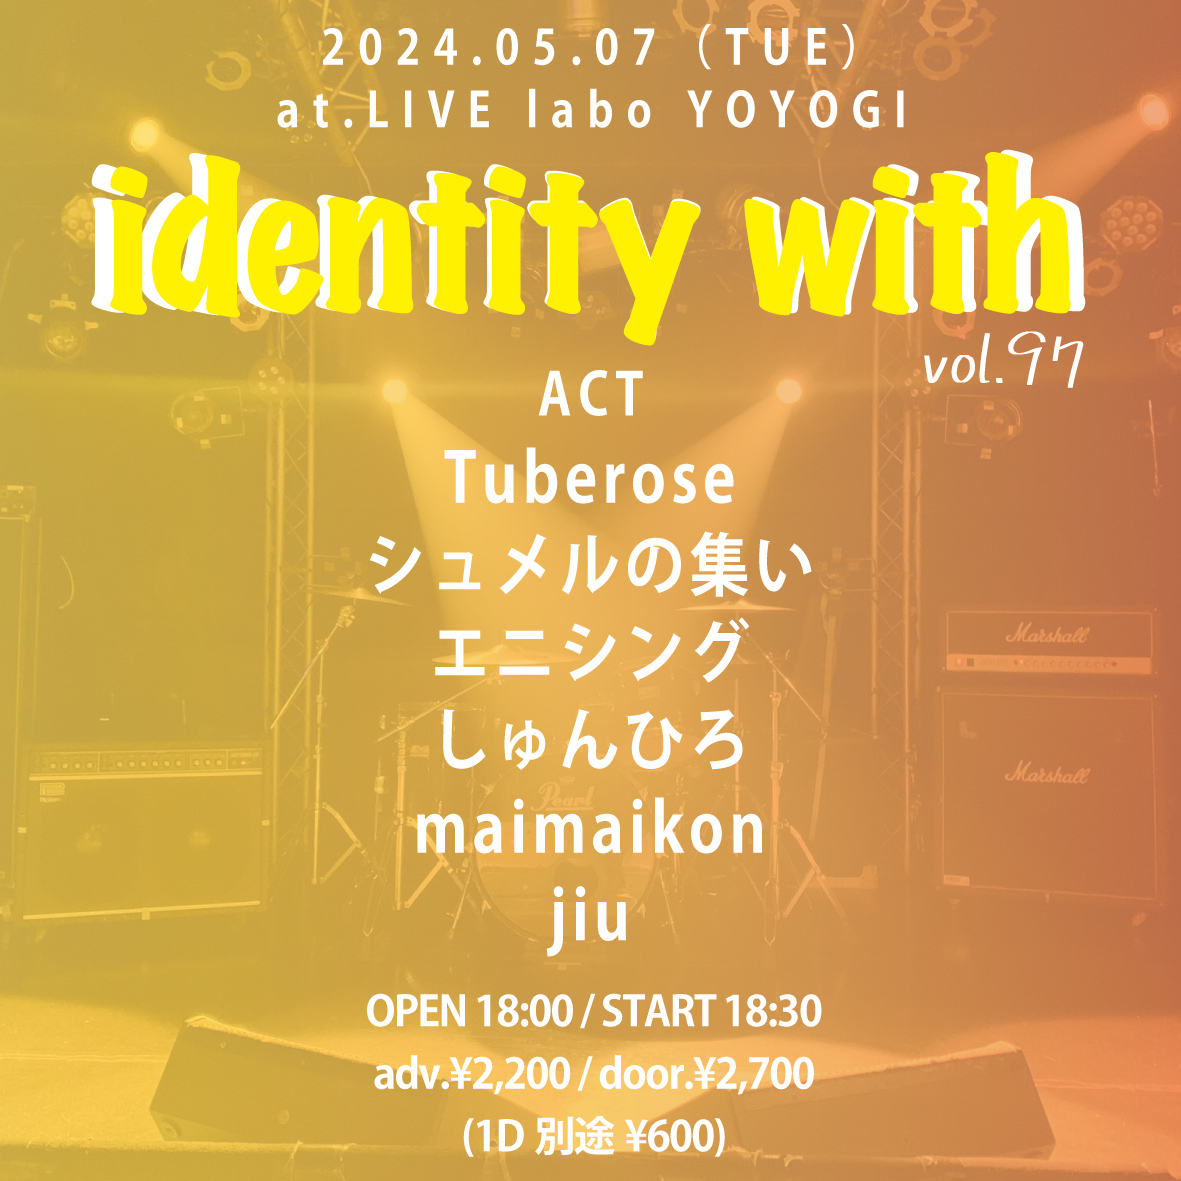 identity with vol.97